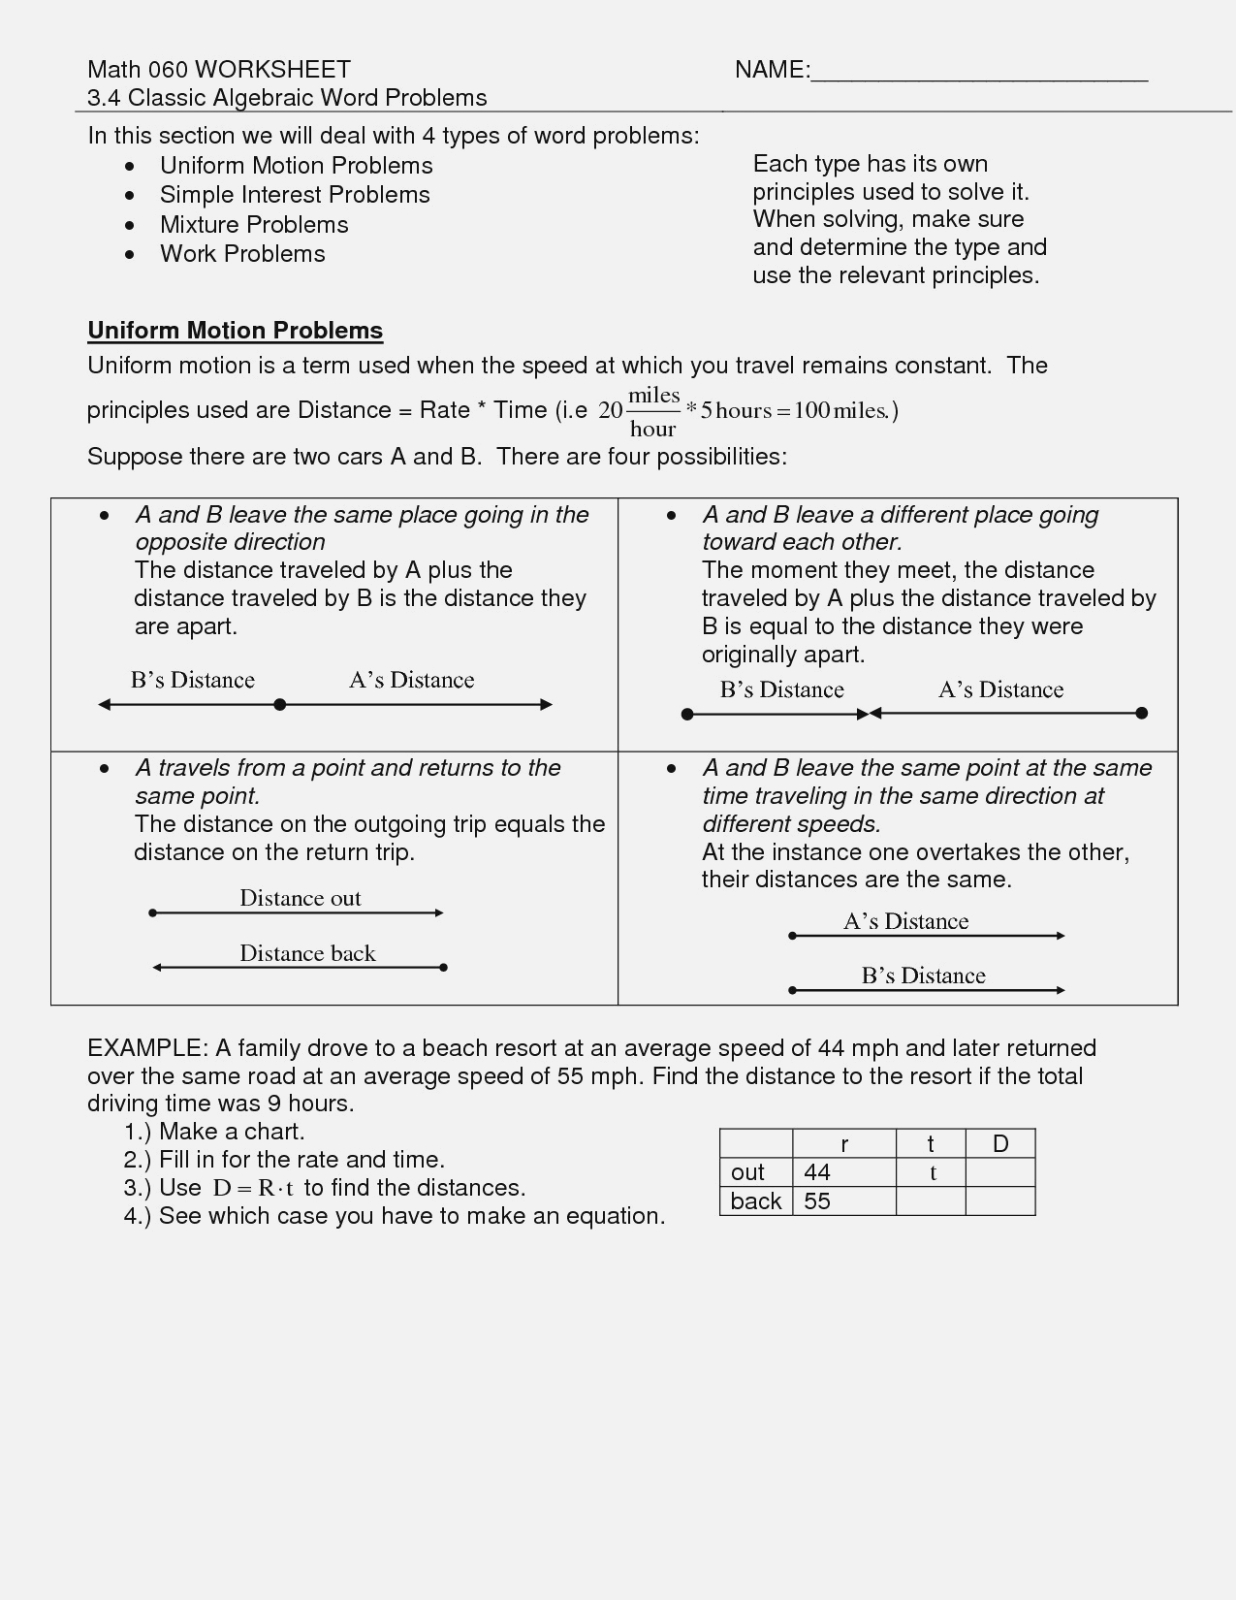 Word Formation Worksheet Pdf Fresh Word Form Worksheets New Word Regarding Filling Out Forms Worksheets Pdf